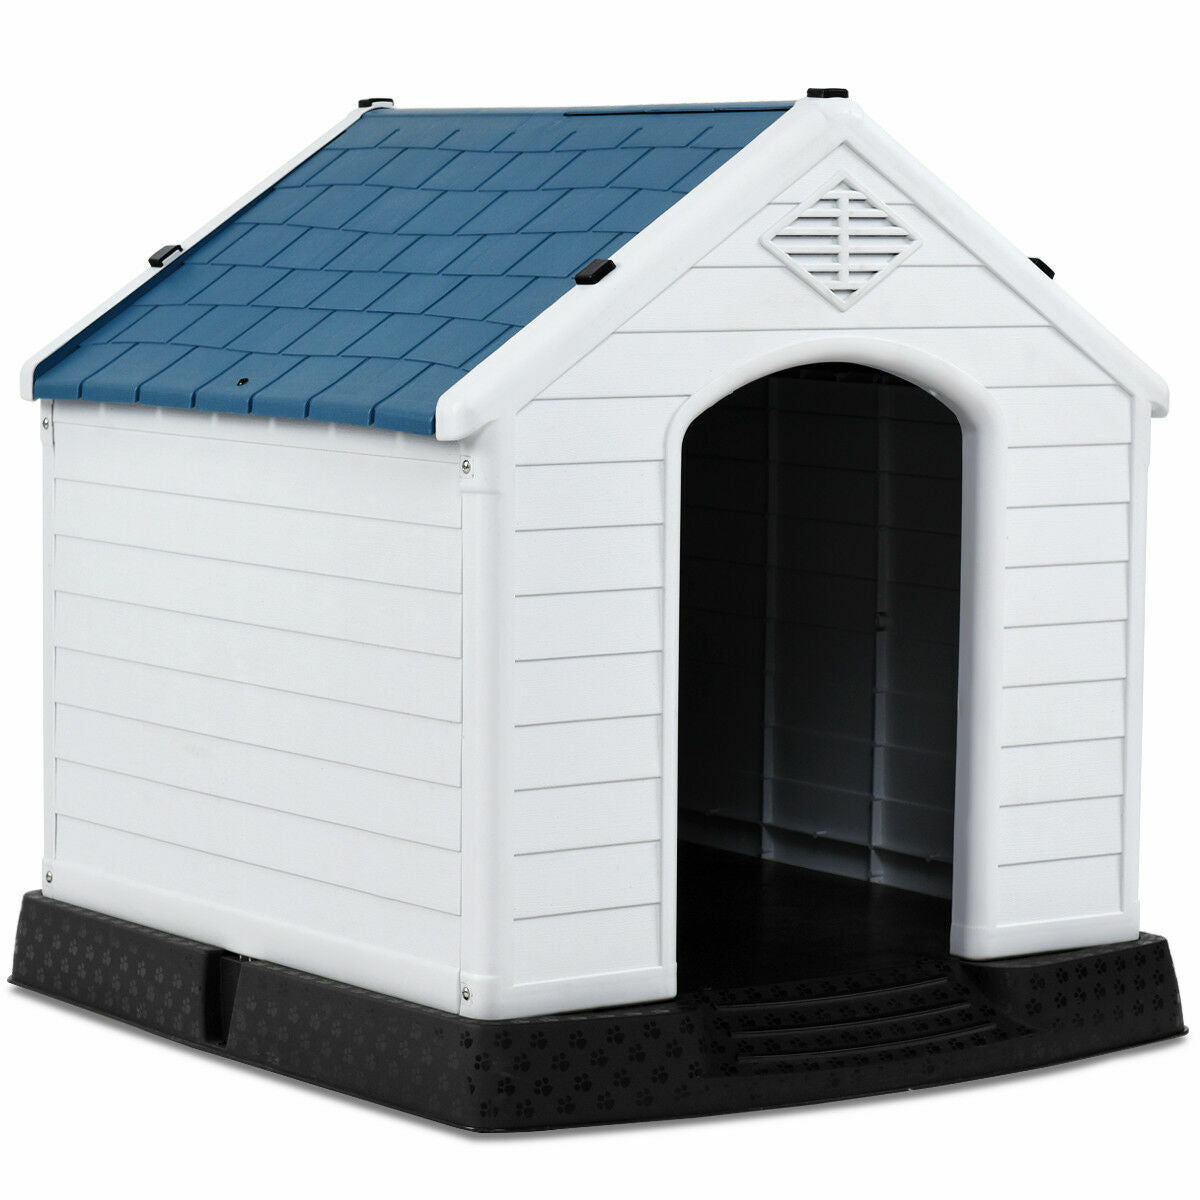 Medium-Sized Dog House Durable Waterproof Indoor & Outdoor Pet Shelter